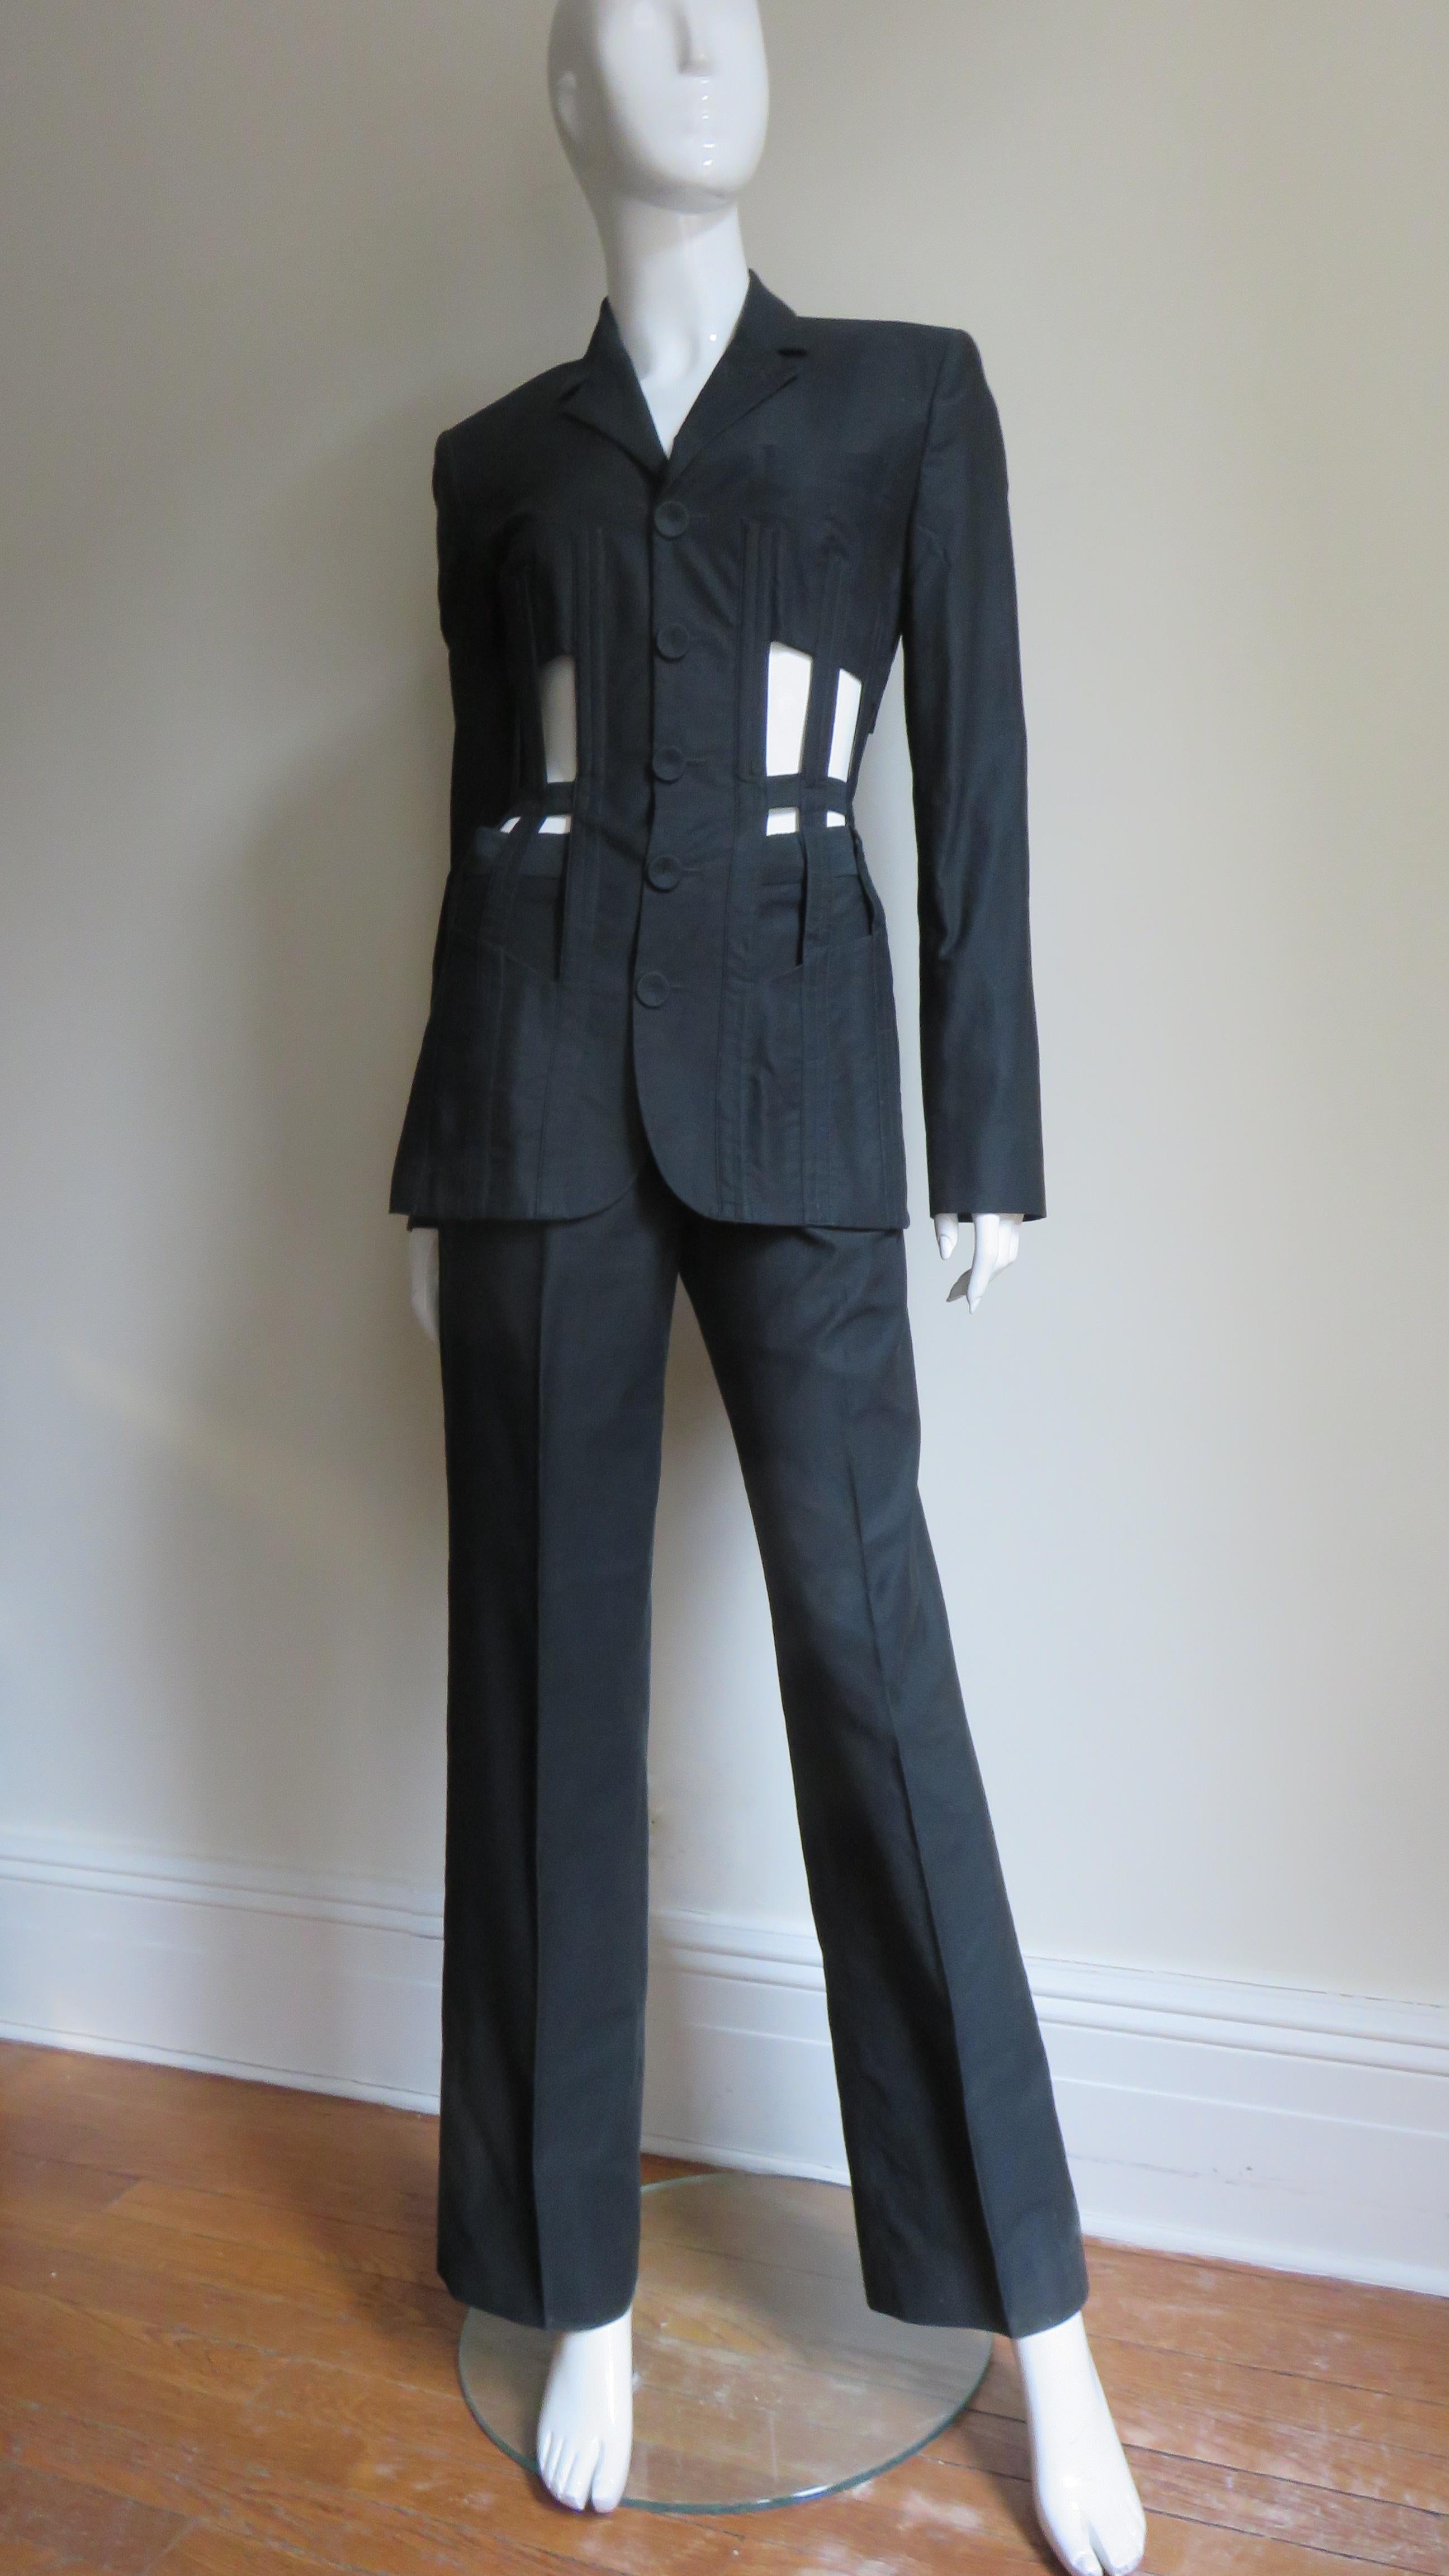 Jean Paul Gaultier Iconic Cage Corset lace up Jacket Pant Suit S/S 1989 For Sale 5